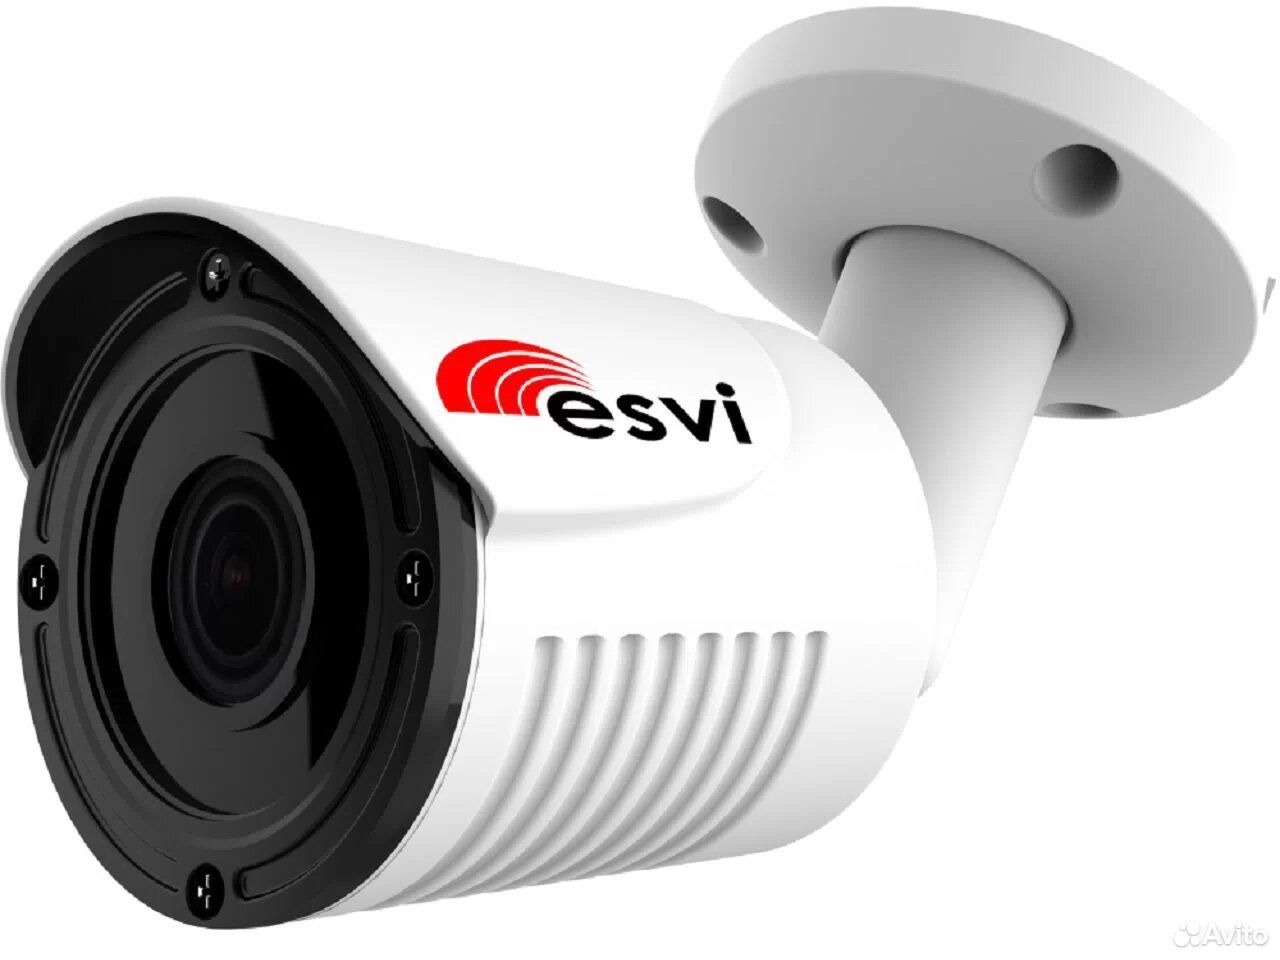 Камера 20 1 3 8. Px-IP-bh30-f23-p BV уличная IP видеокамера 2.0МП F 2.8мм POE. ESVI EVC-bh30-sl20-p/c (BV) уличная IP видеокамера, 2.0МП, F=2.8мм, POE, SD. ESVI EVC-bh30-s20-p/c уличная IP видеокамера, 2.0МП, F=3.6мм, POE, SD. ESVI EVC-bh30-f22-p (BV) уличная IP видеокамера, 2.0МП, F=2.8мм, POE.